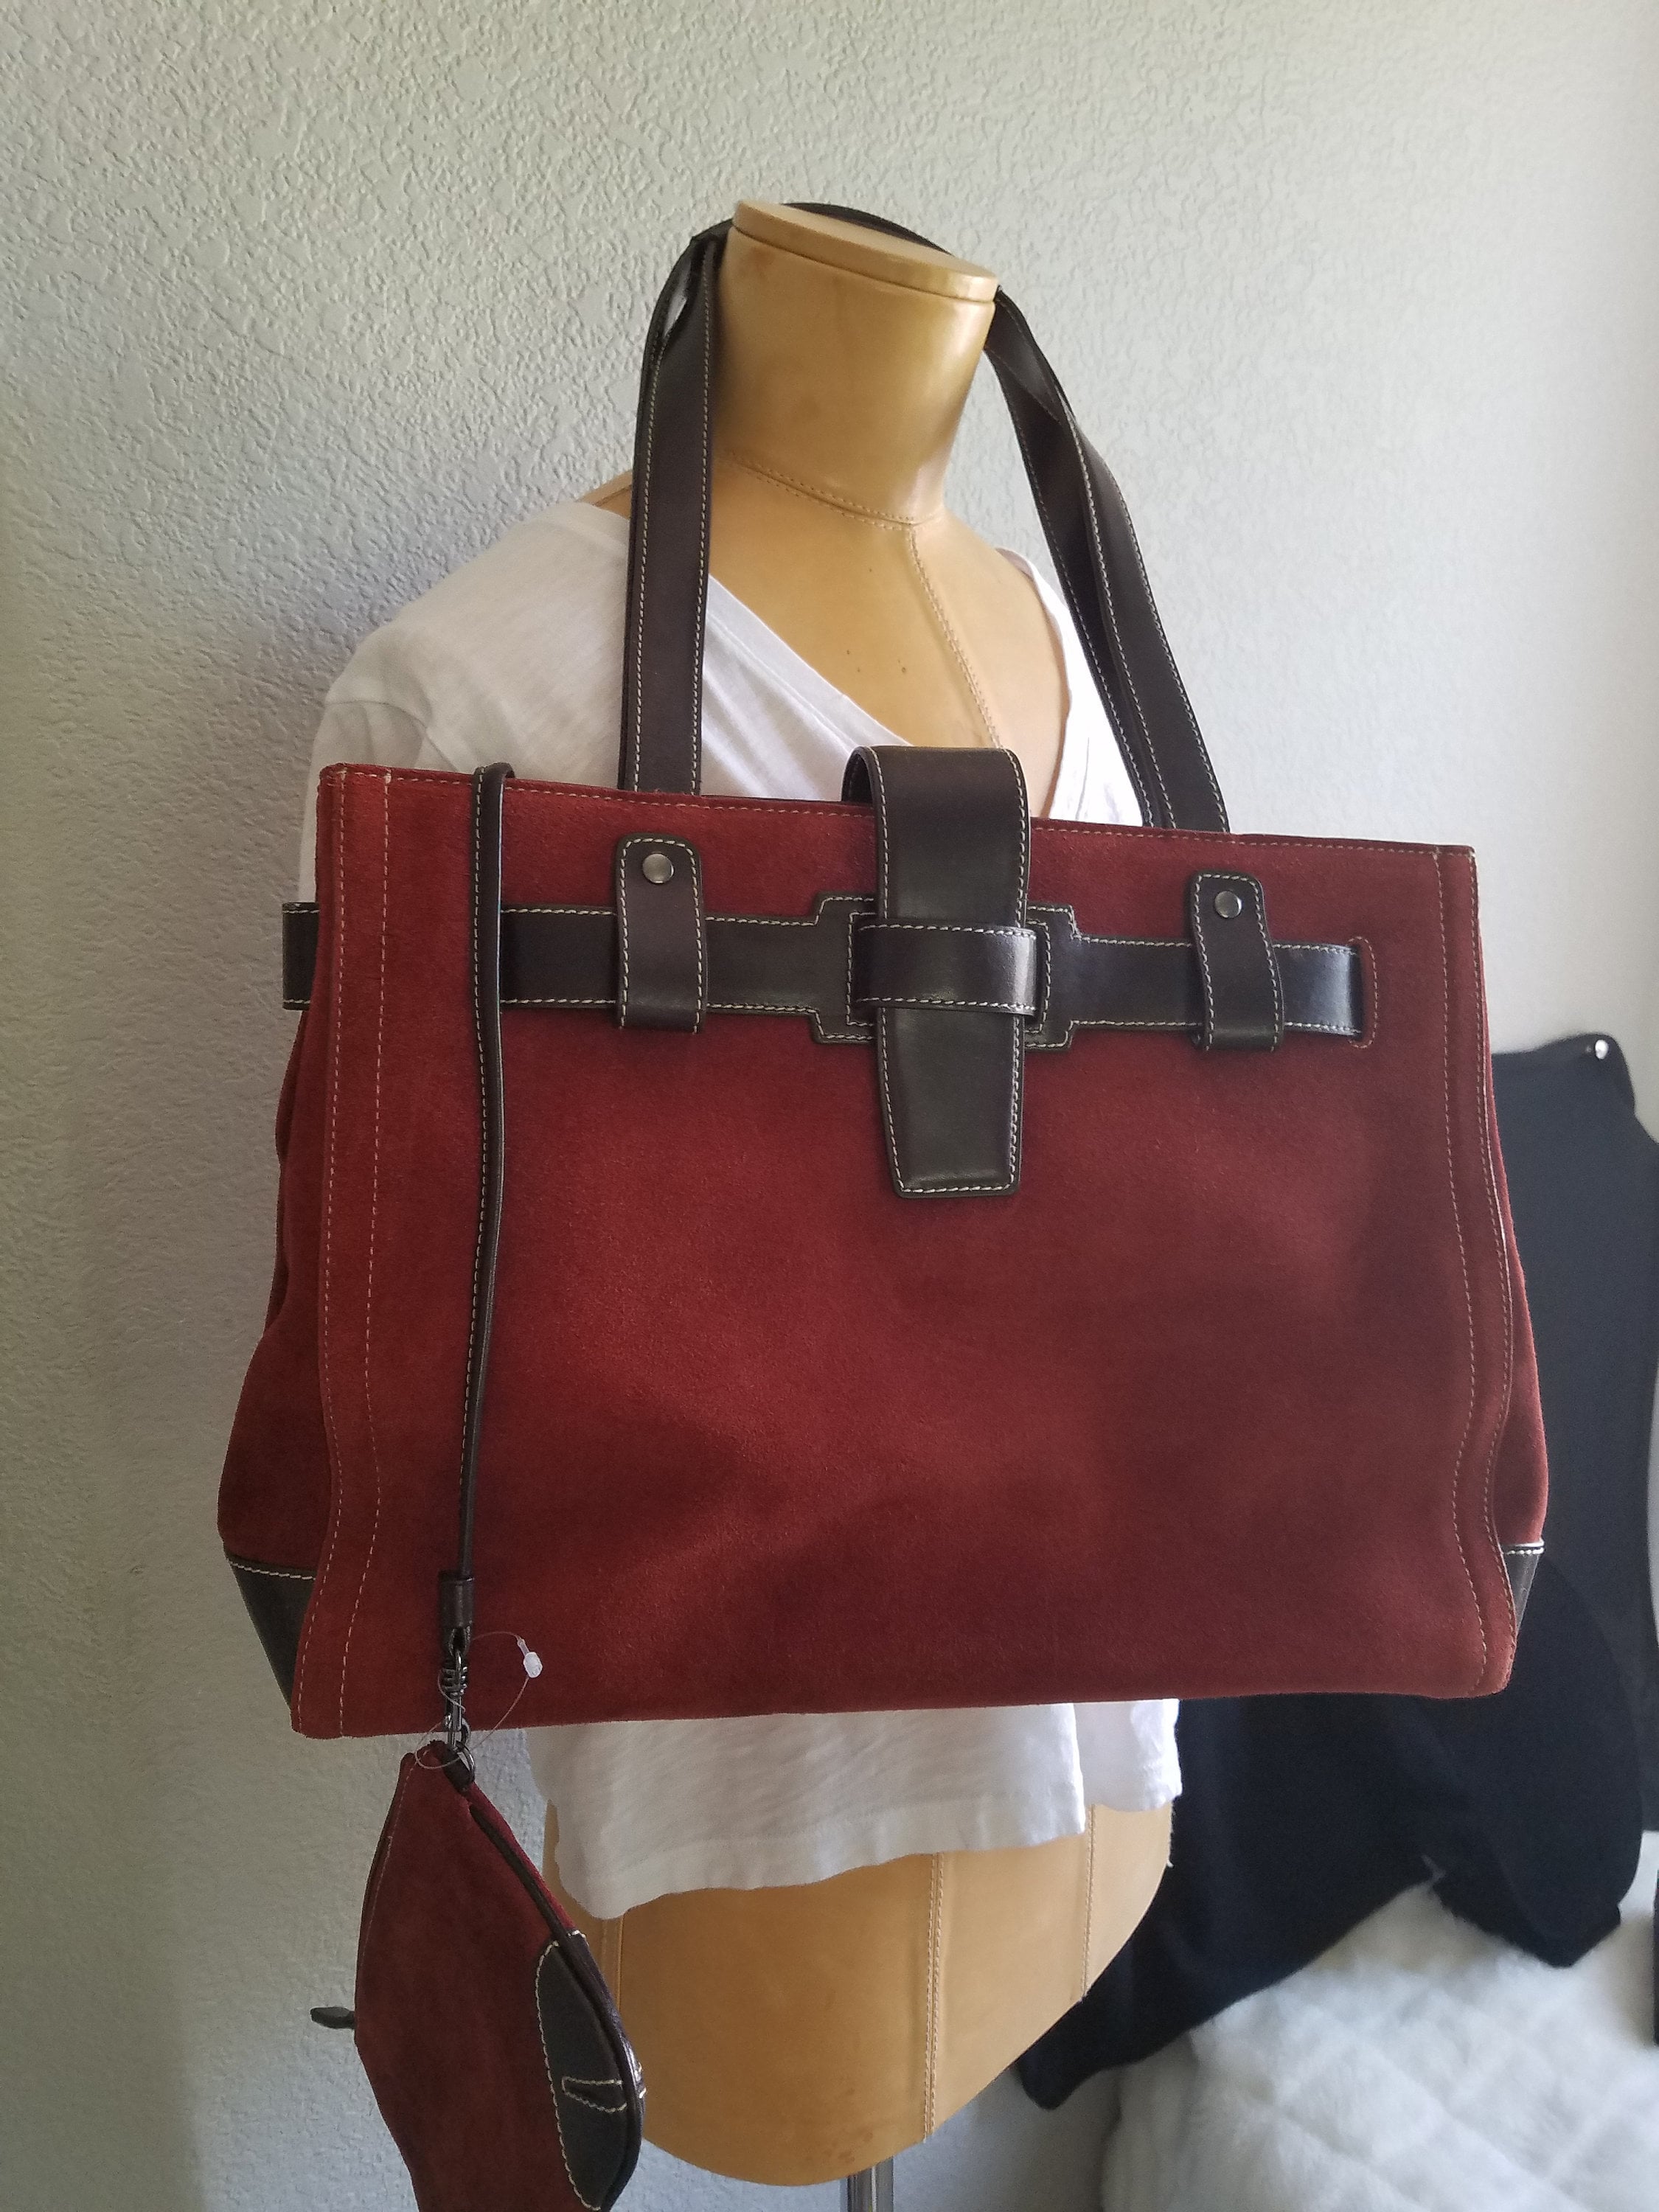 Franklin Covey Dark Red Leather Organizer Bag